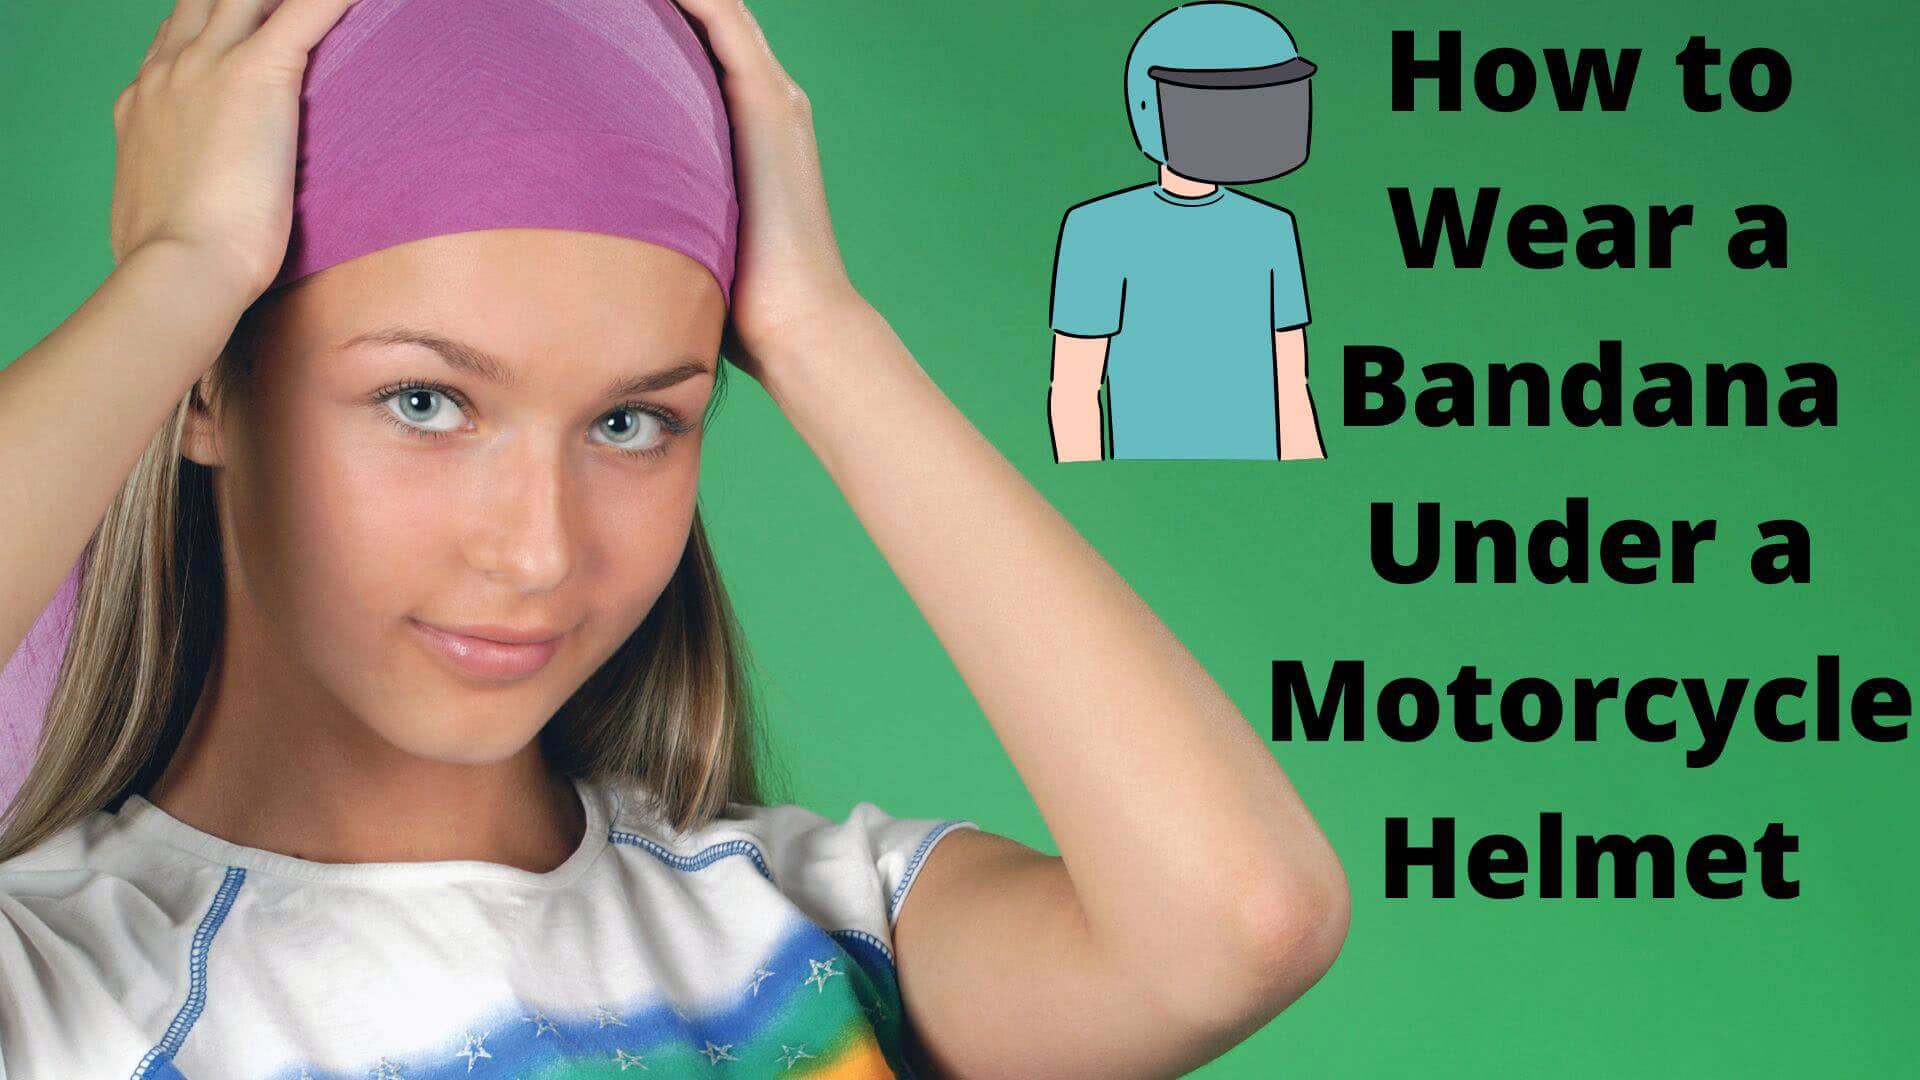 How to Wear a Bandana Under a Motorcycle Helmet